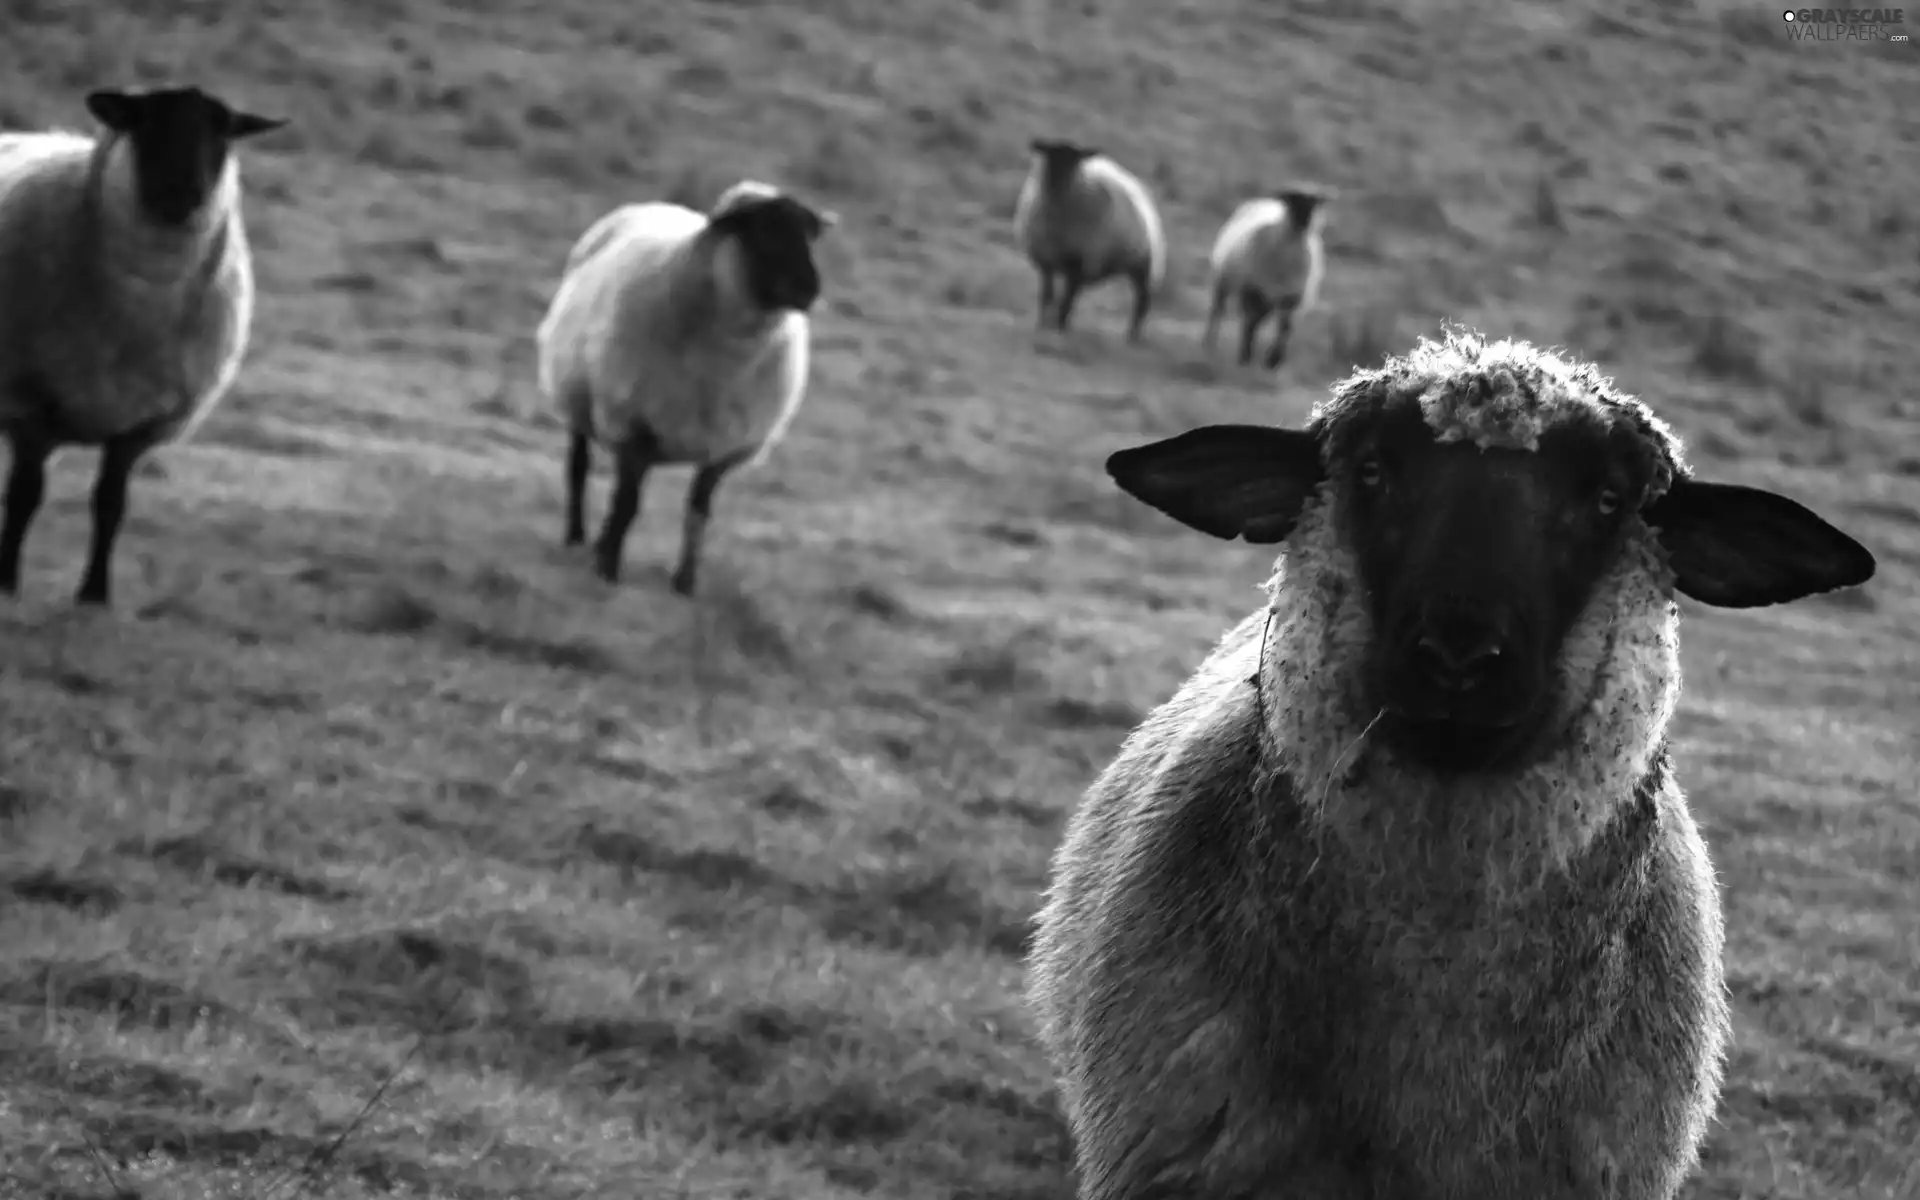 pasture, Sheep